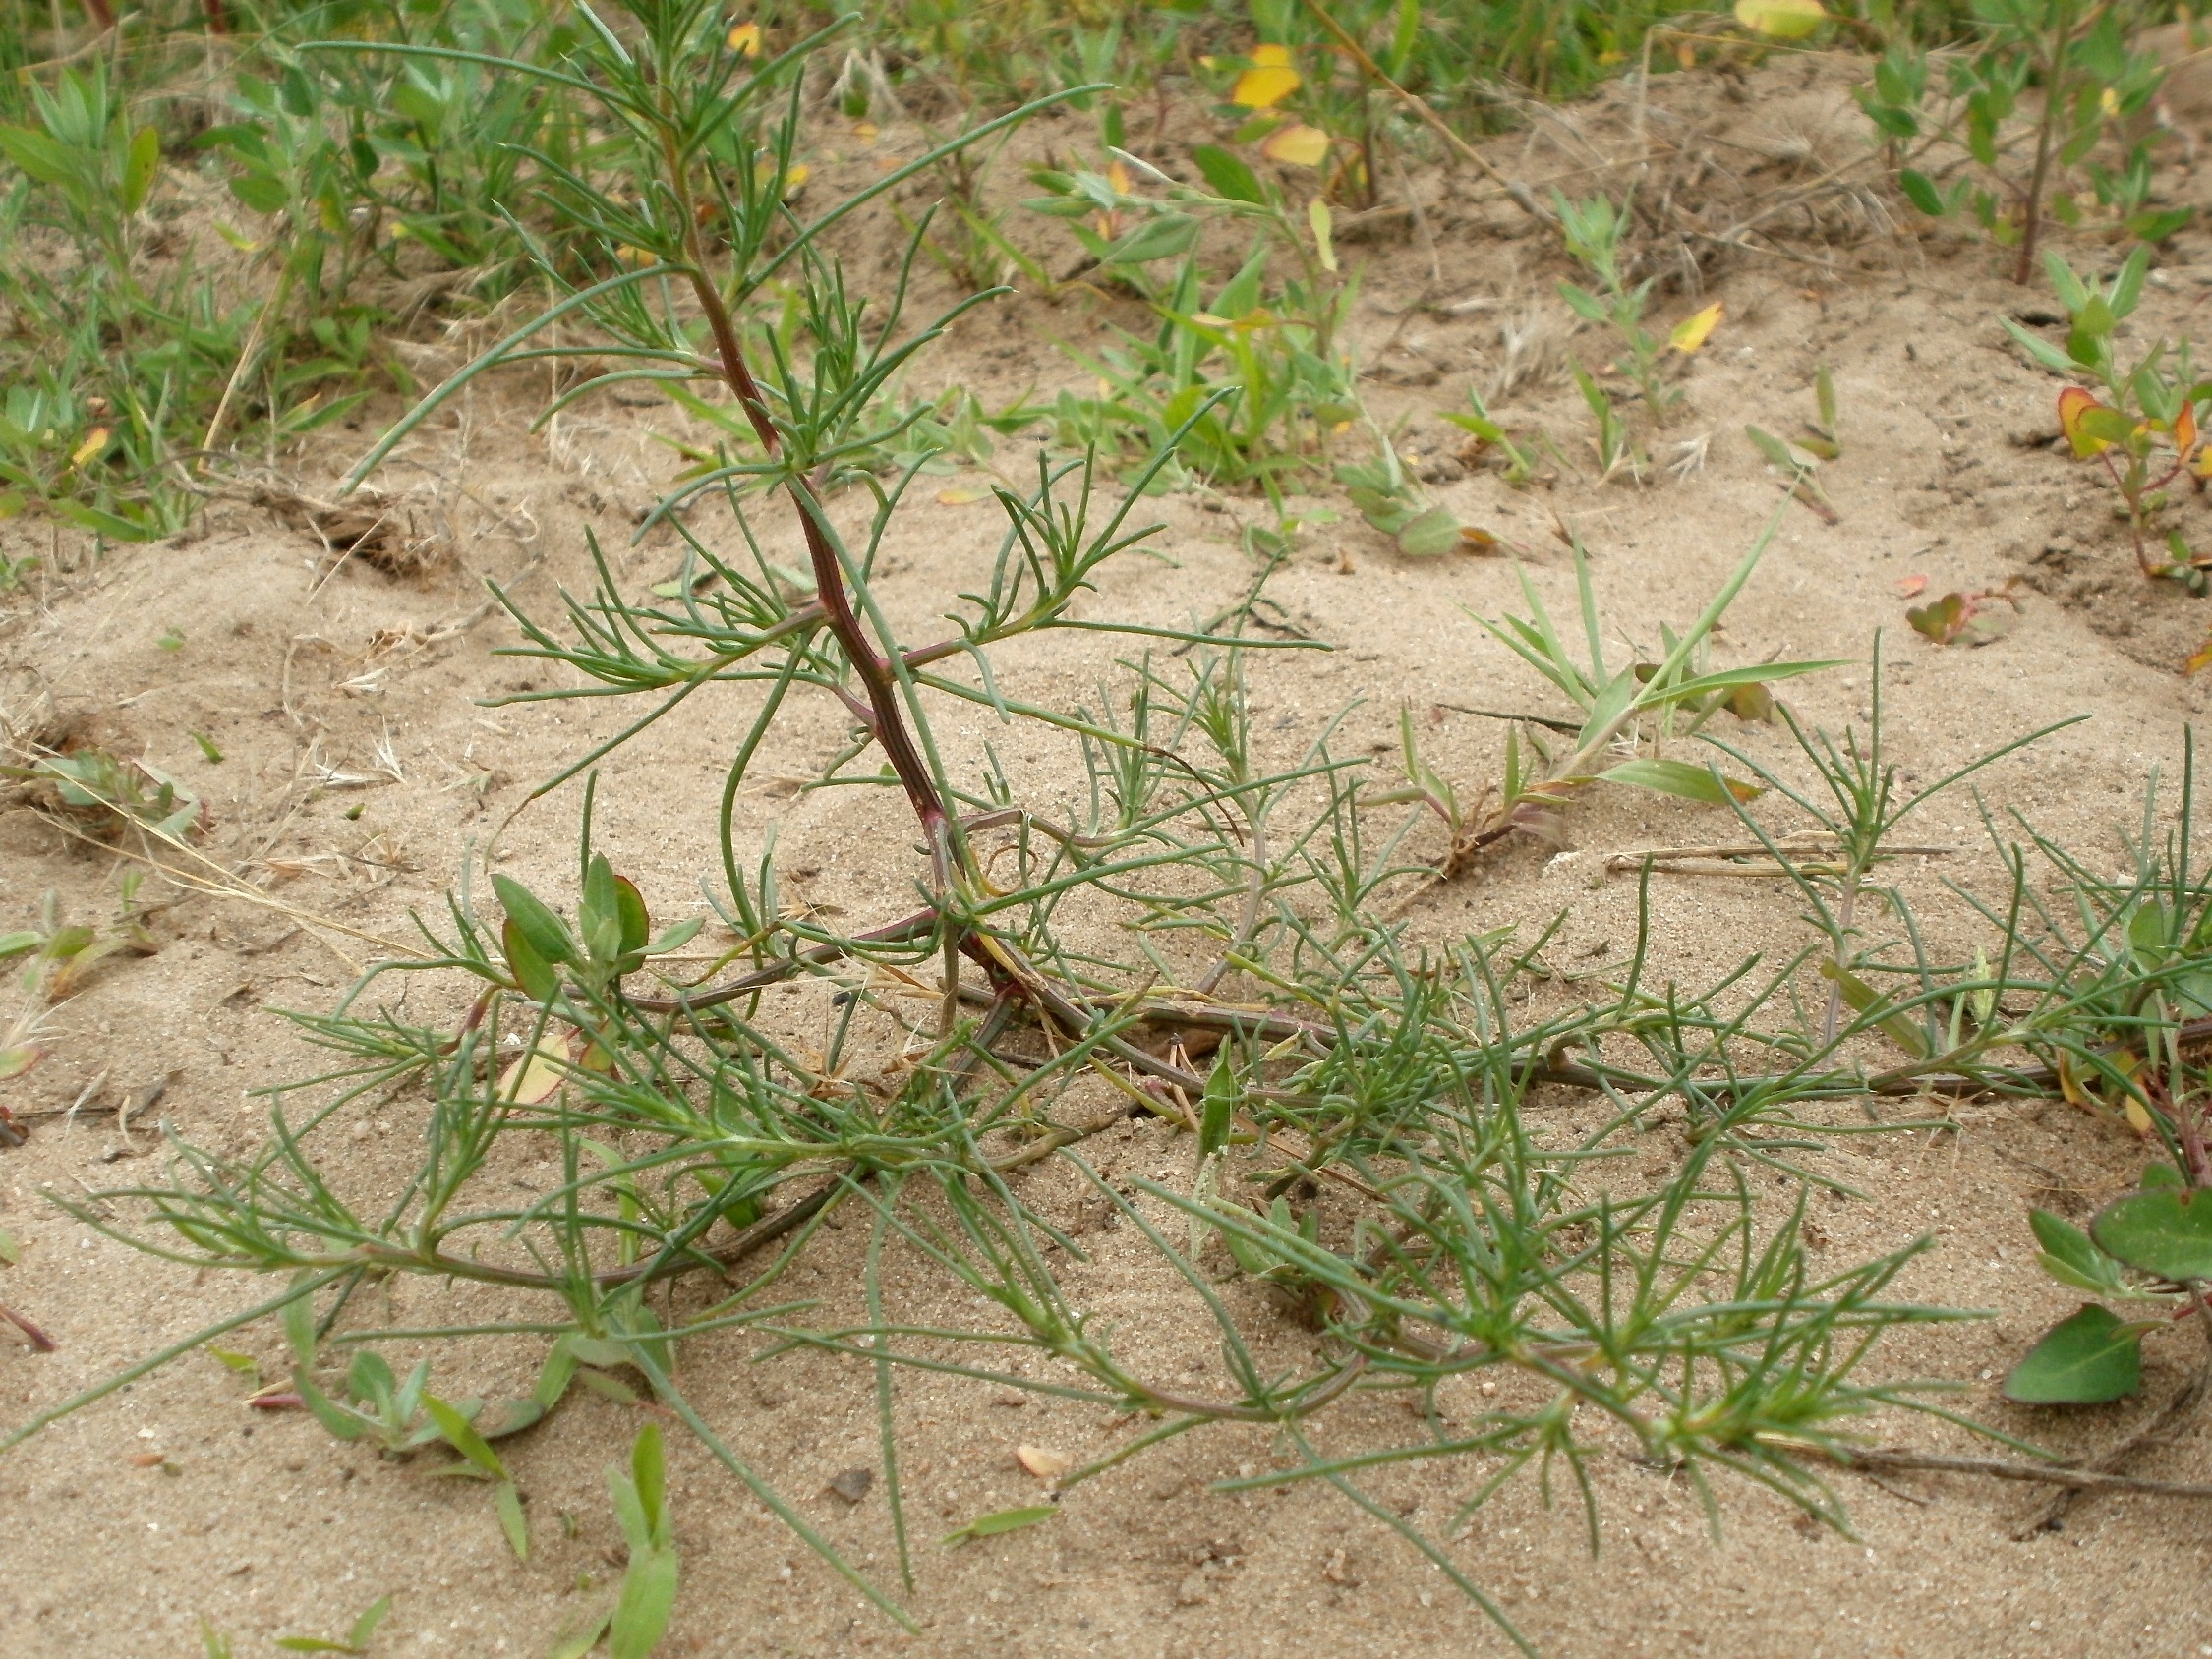 Tumbleweed, Deserts, Invasive Species, Wind Dispersal